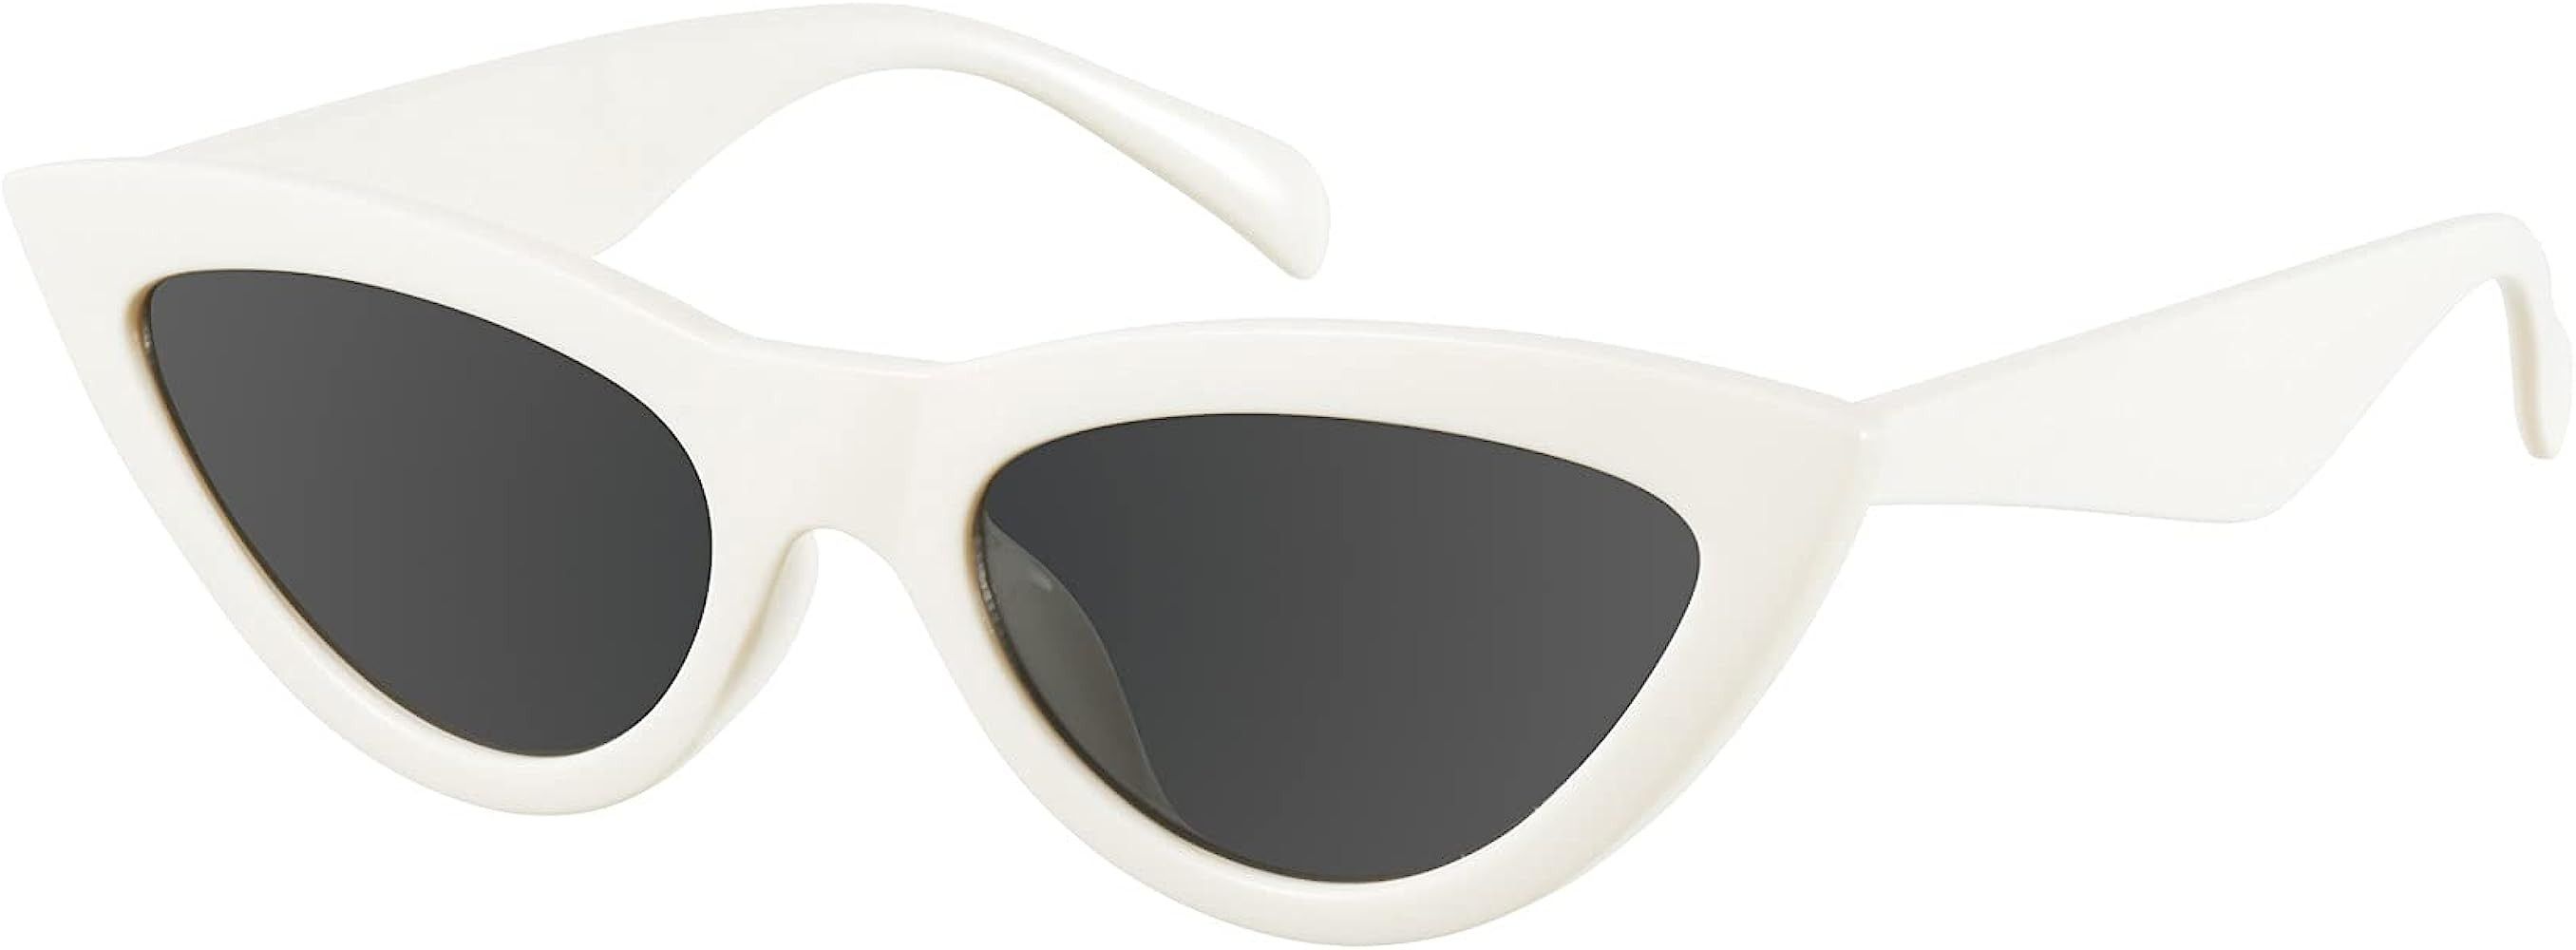 mosanana Trendy Cateye Sunglasses for Women Cool Stylish Sunnies MS51810 | Amazon (US)